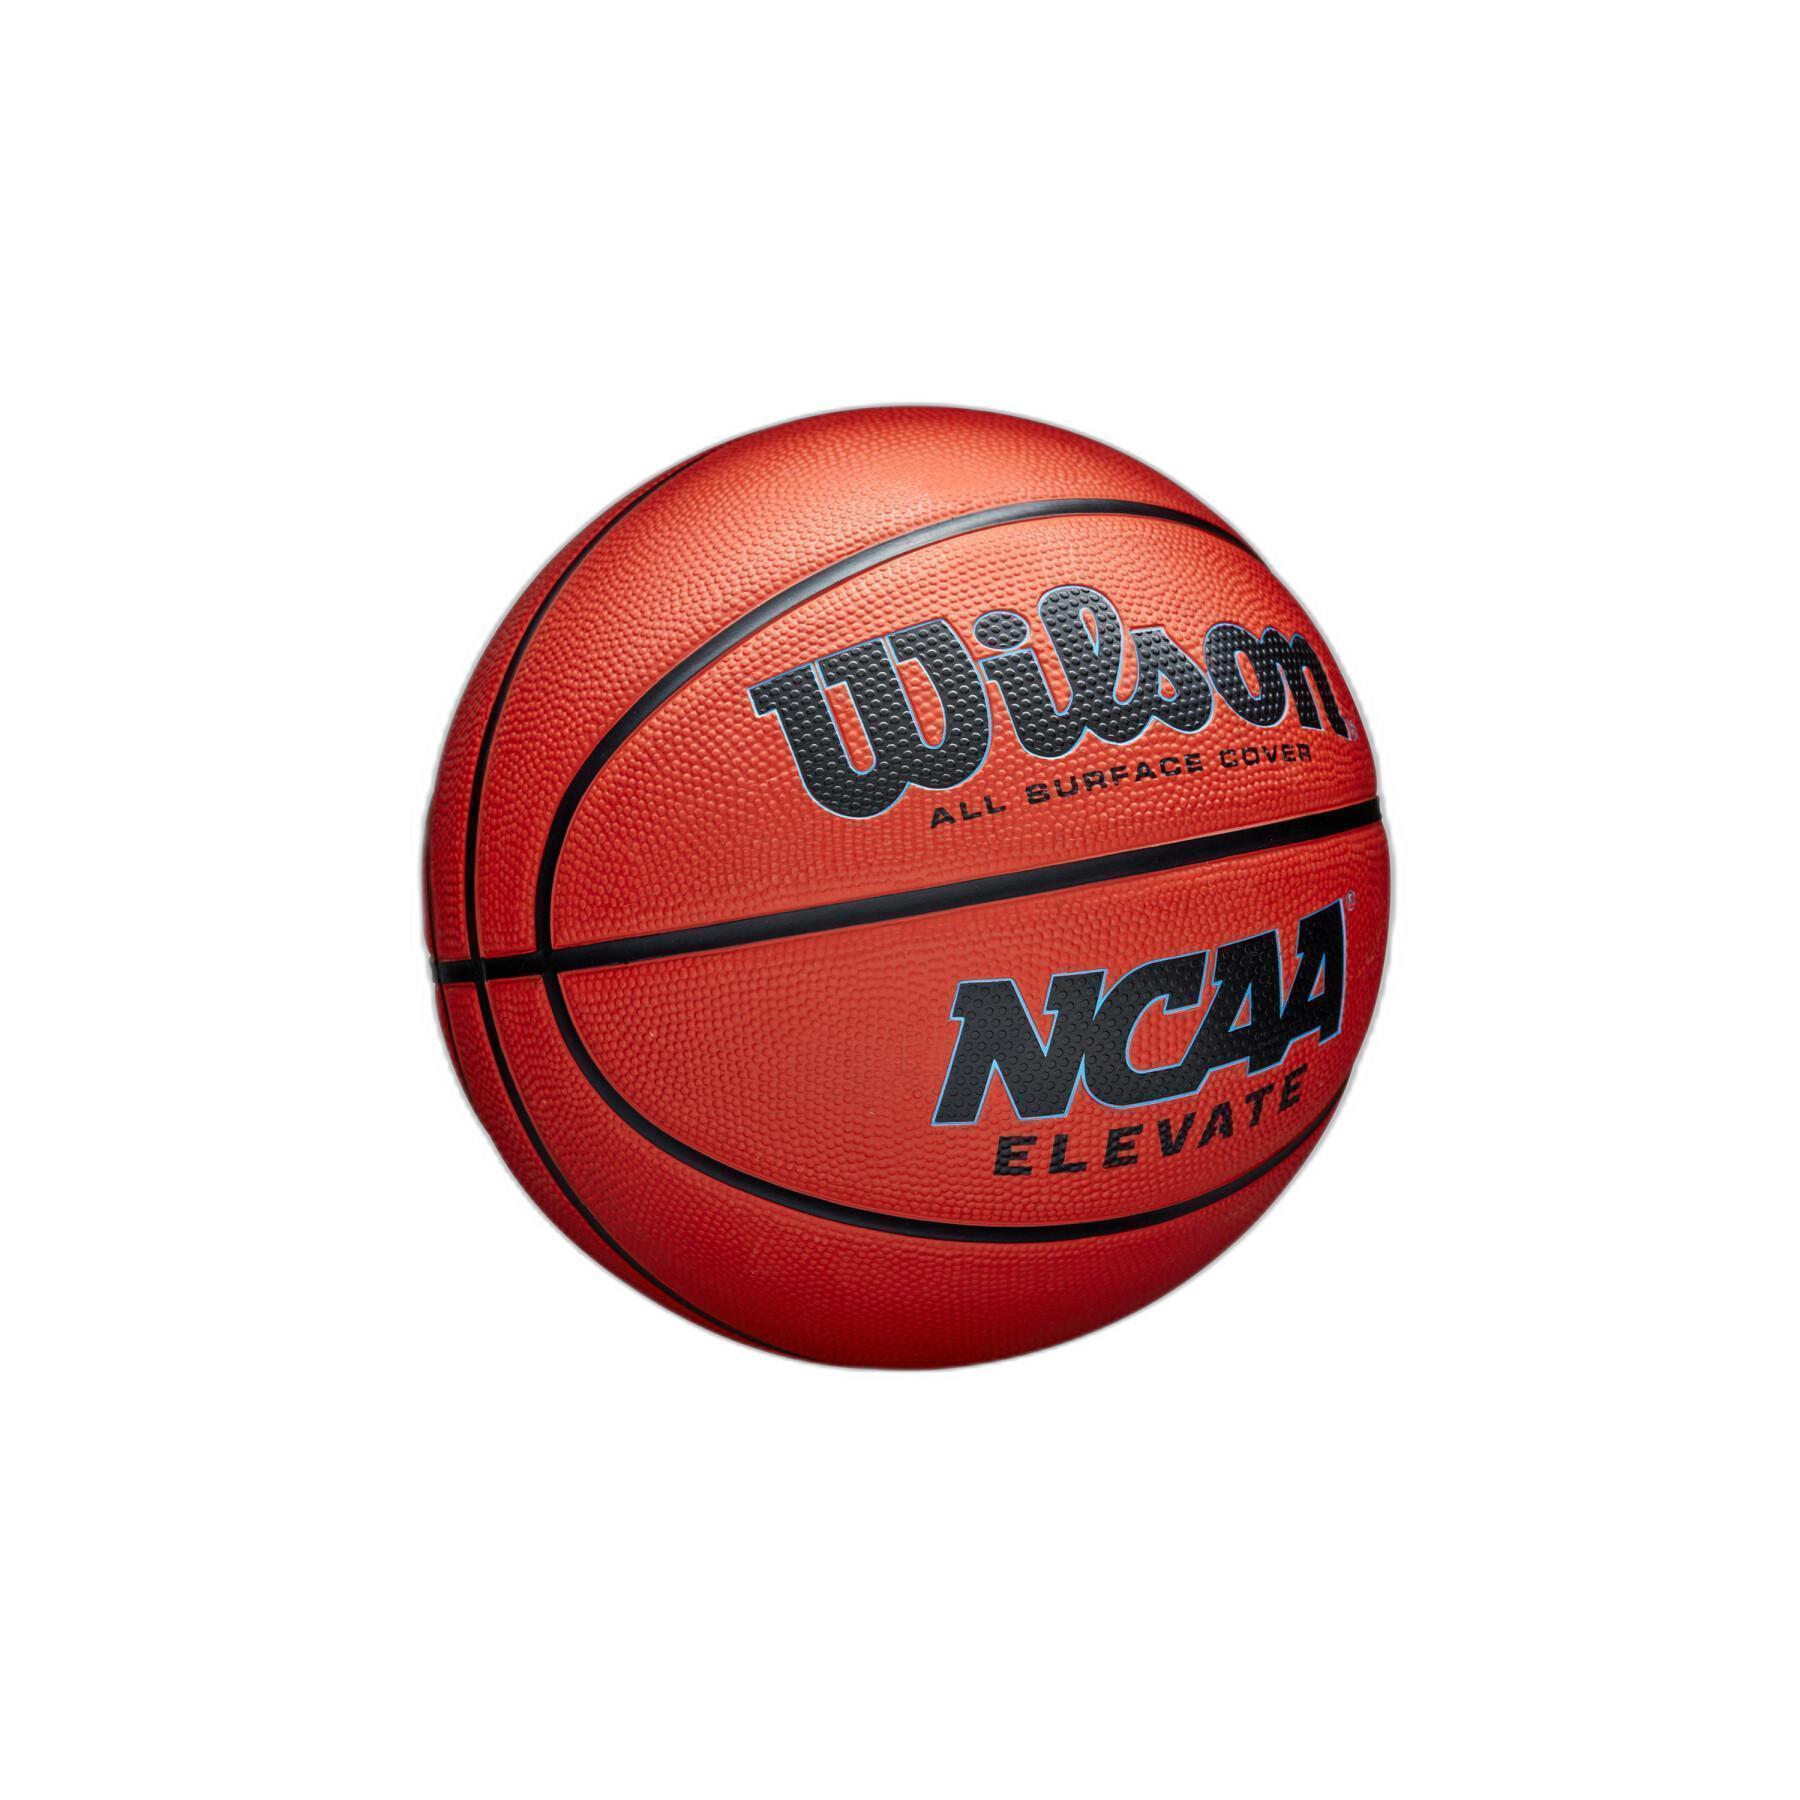 Ballon elevate Wilson NCAA